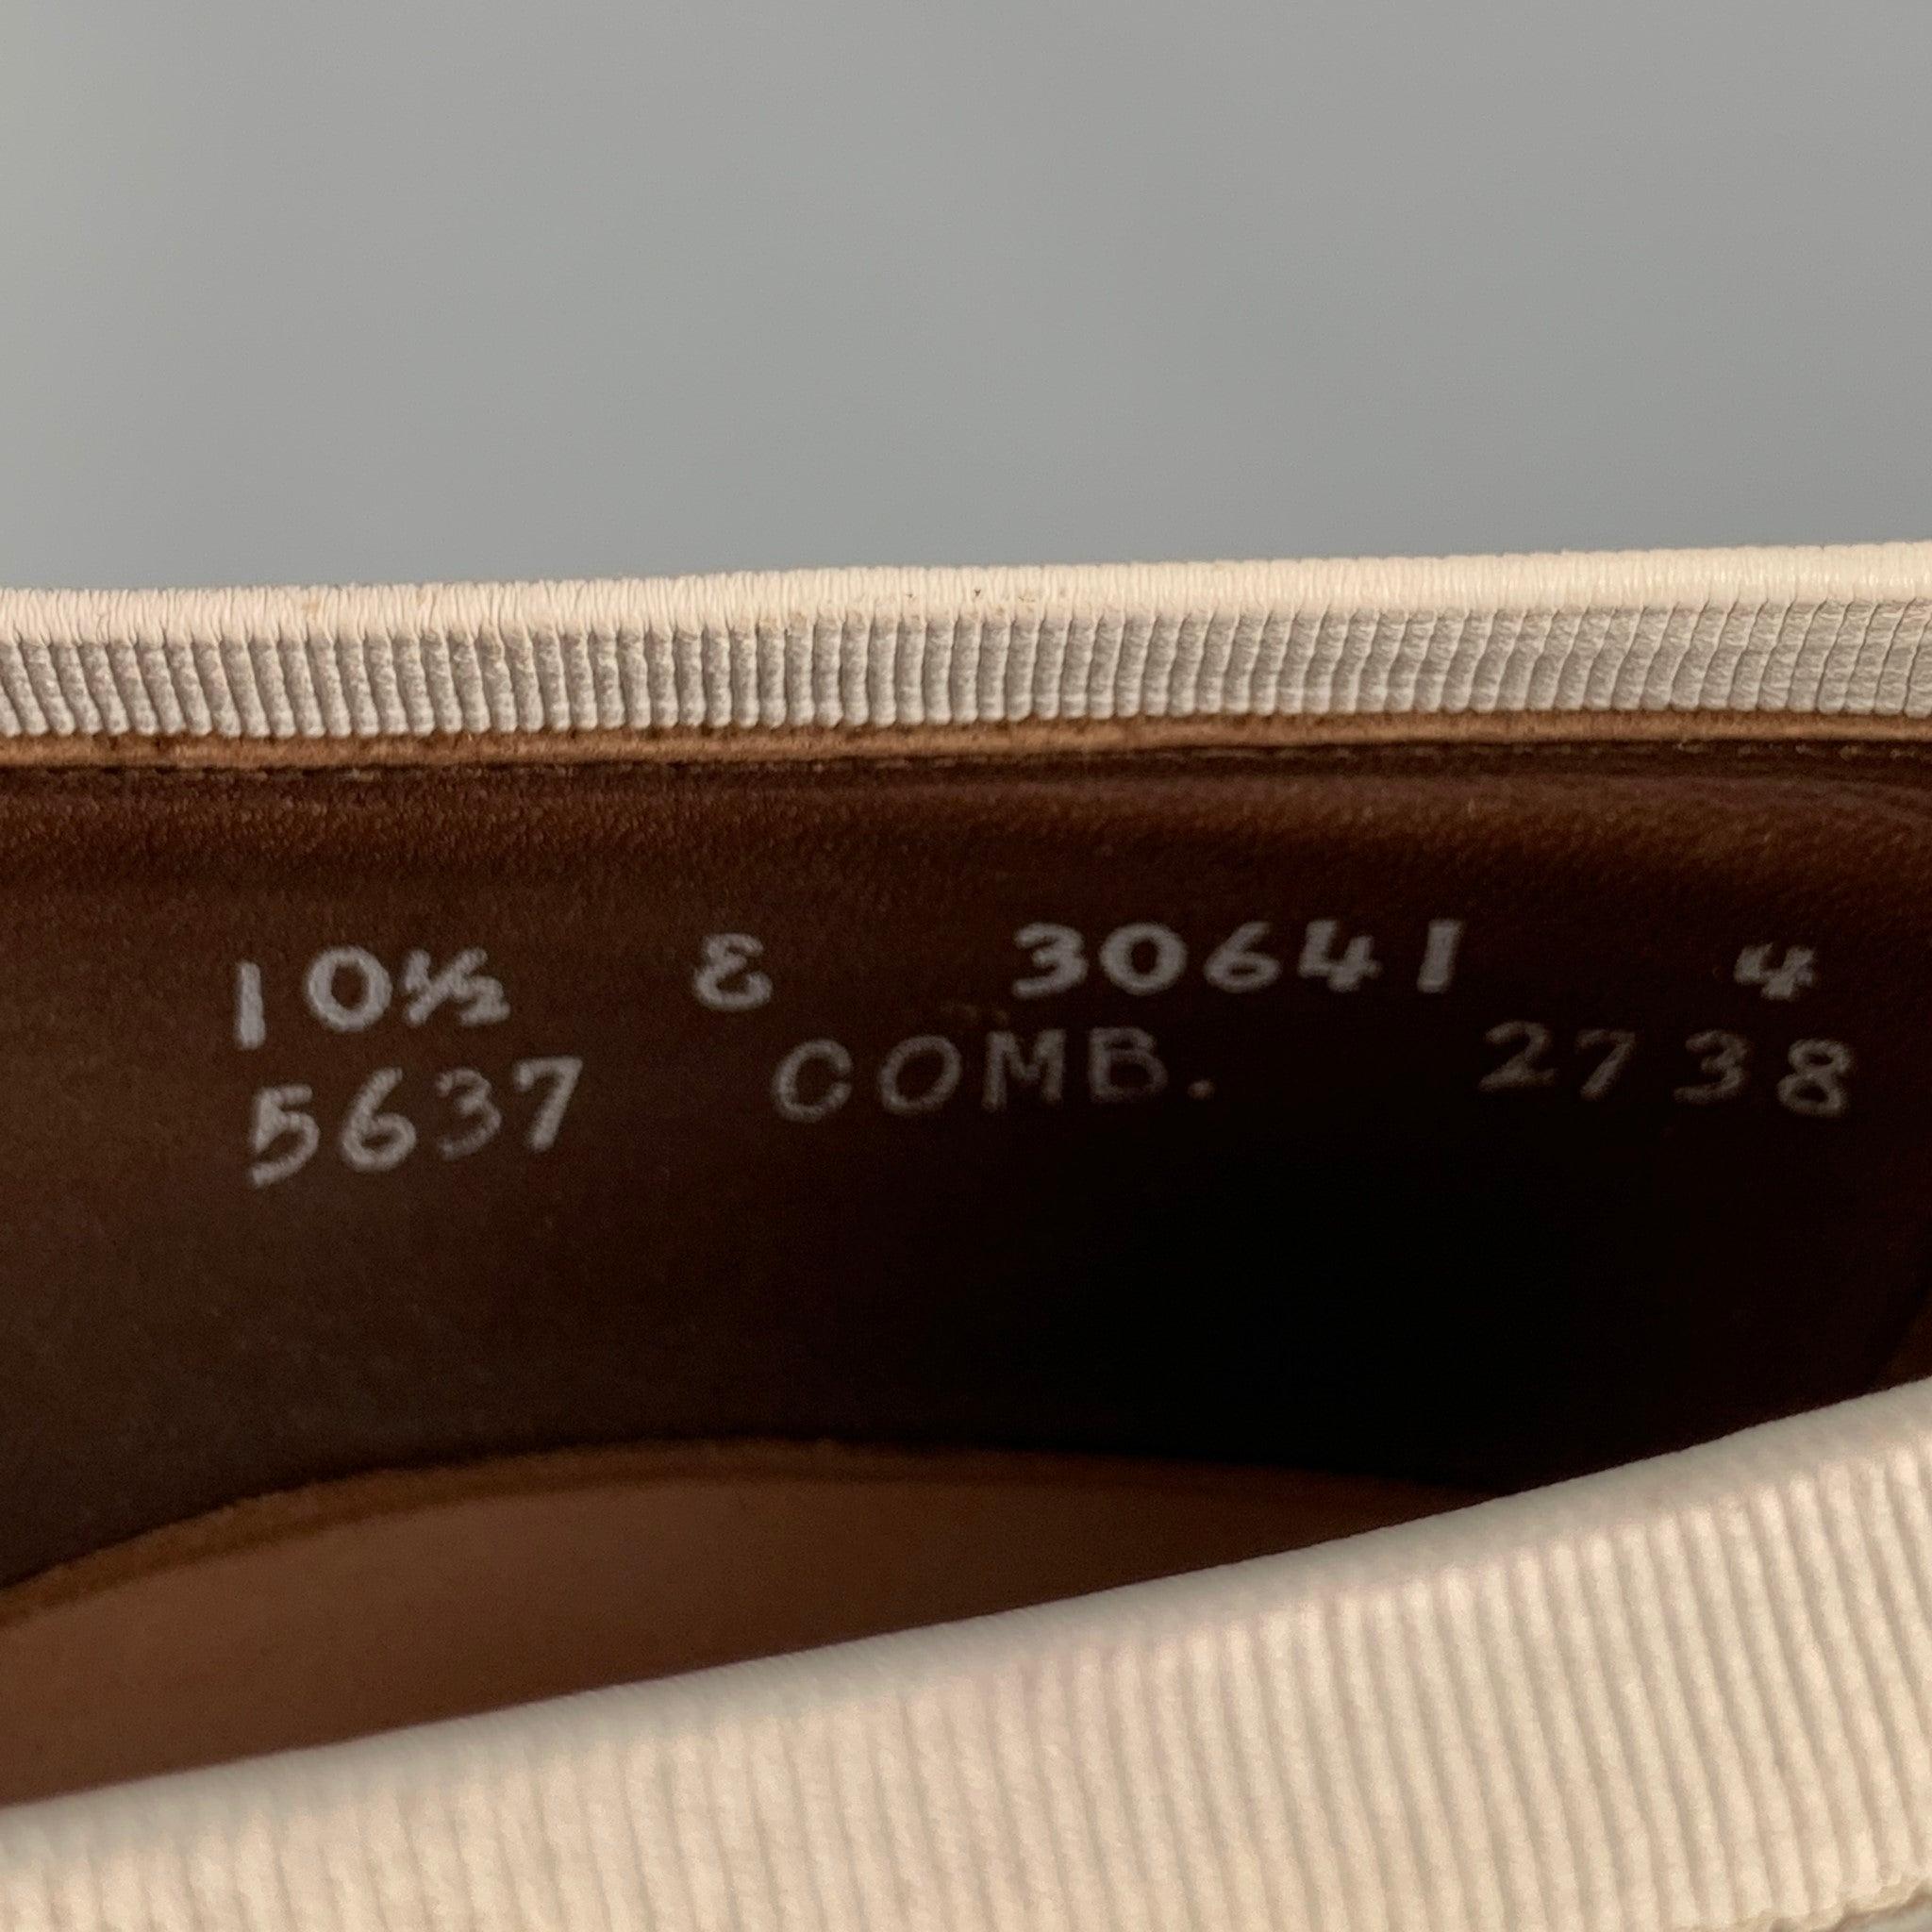 ALLEN EDMONDS Size 10.5 White Leather Tassels Loafers For Sale 2